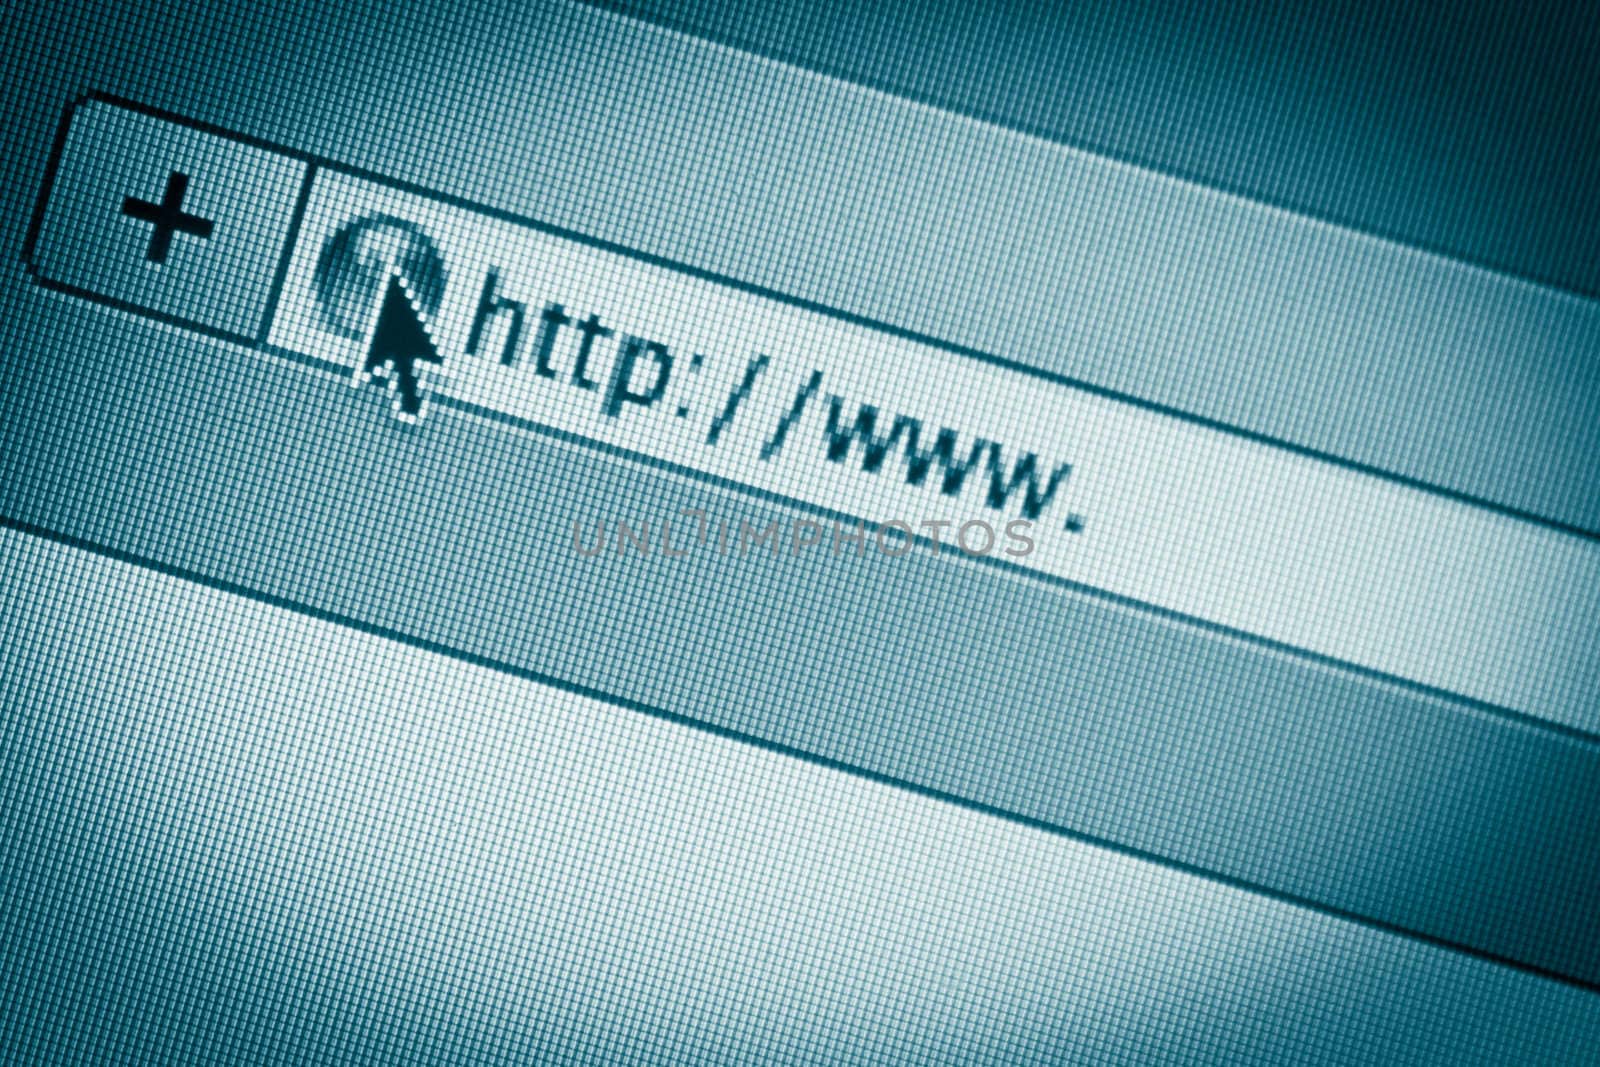 Internet URL by pcusine